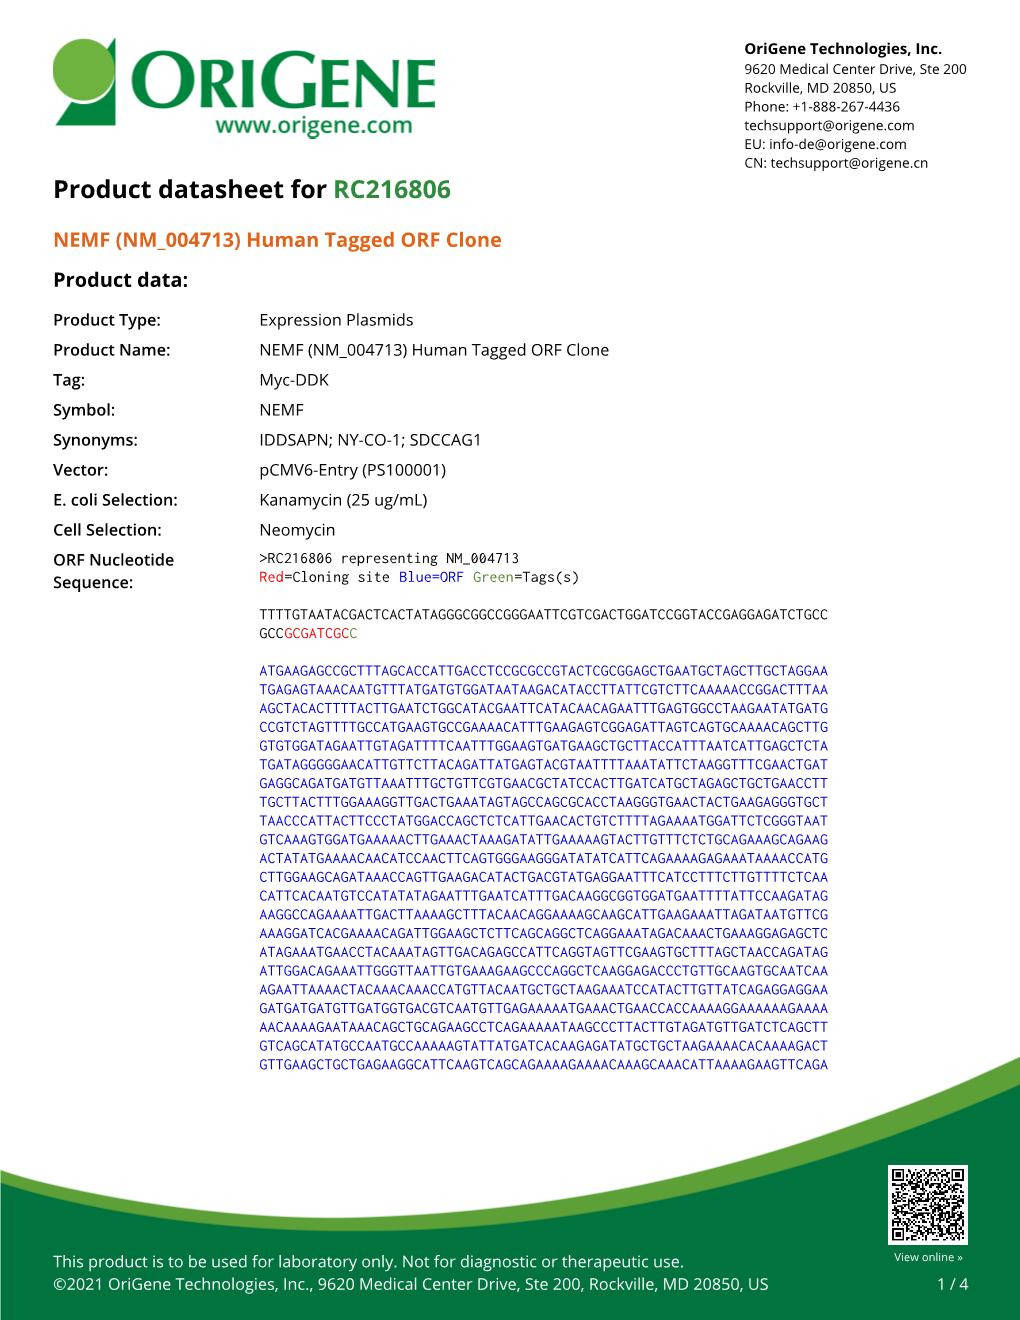 NEMF (NM 004713) Human Tagged ORF Clone Product Data